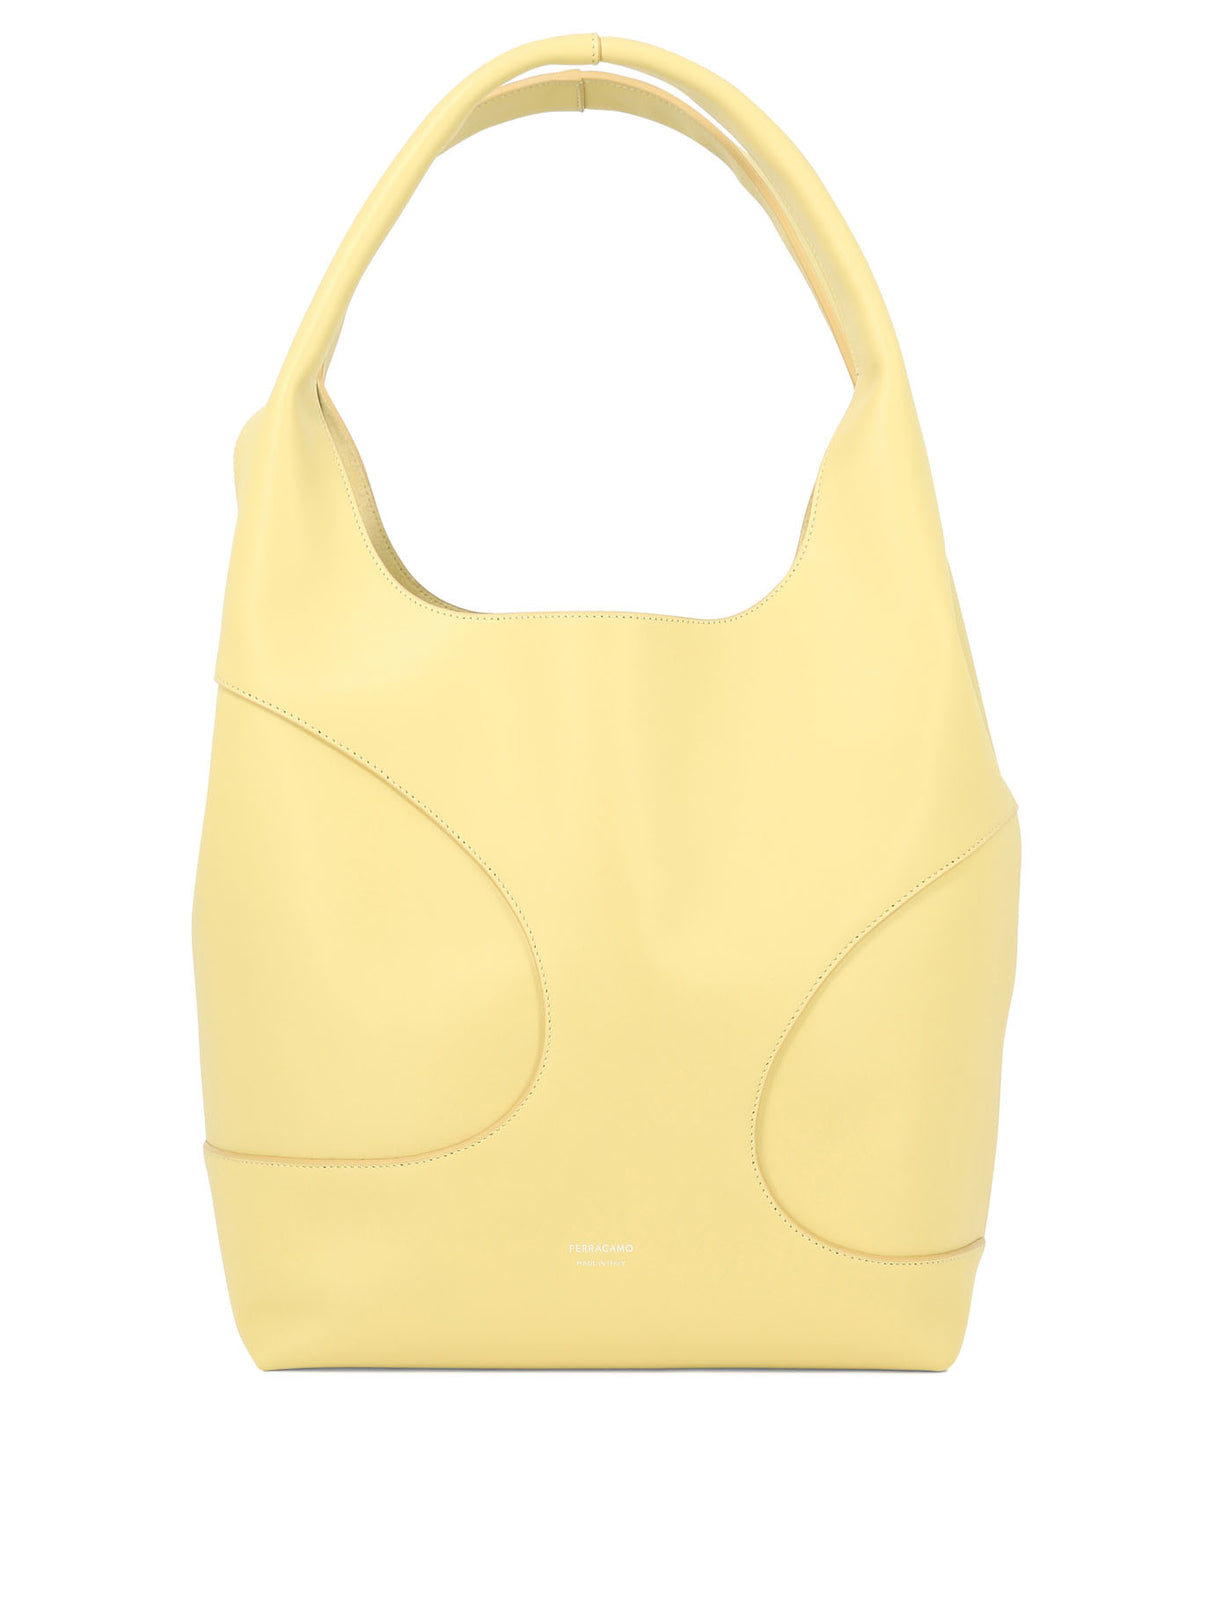 FERRAGAMO Sleek and Chic: Yellow Cut-Out Hobo Handbag for Women